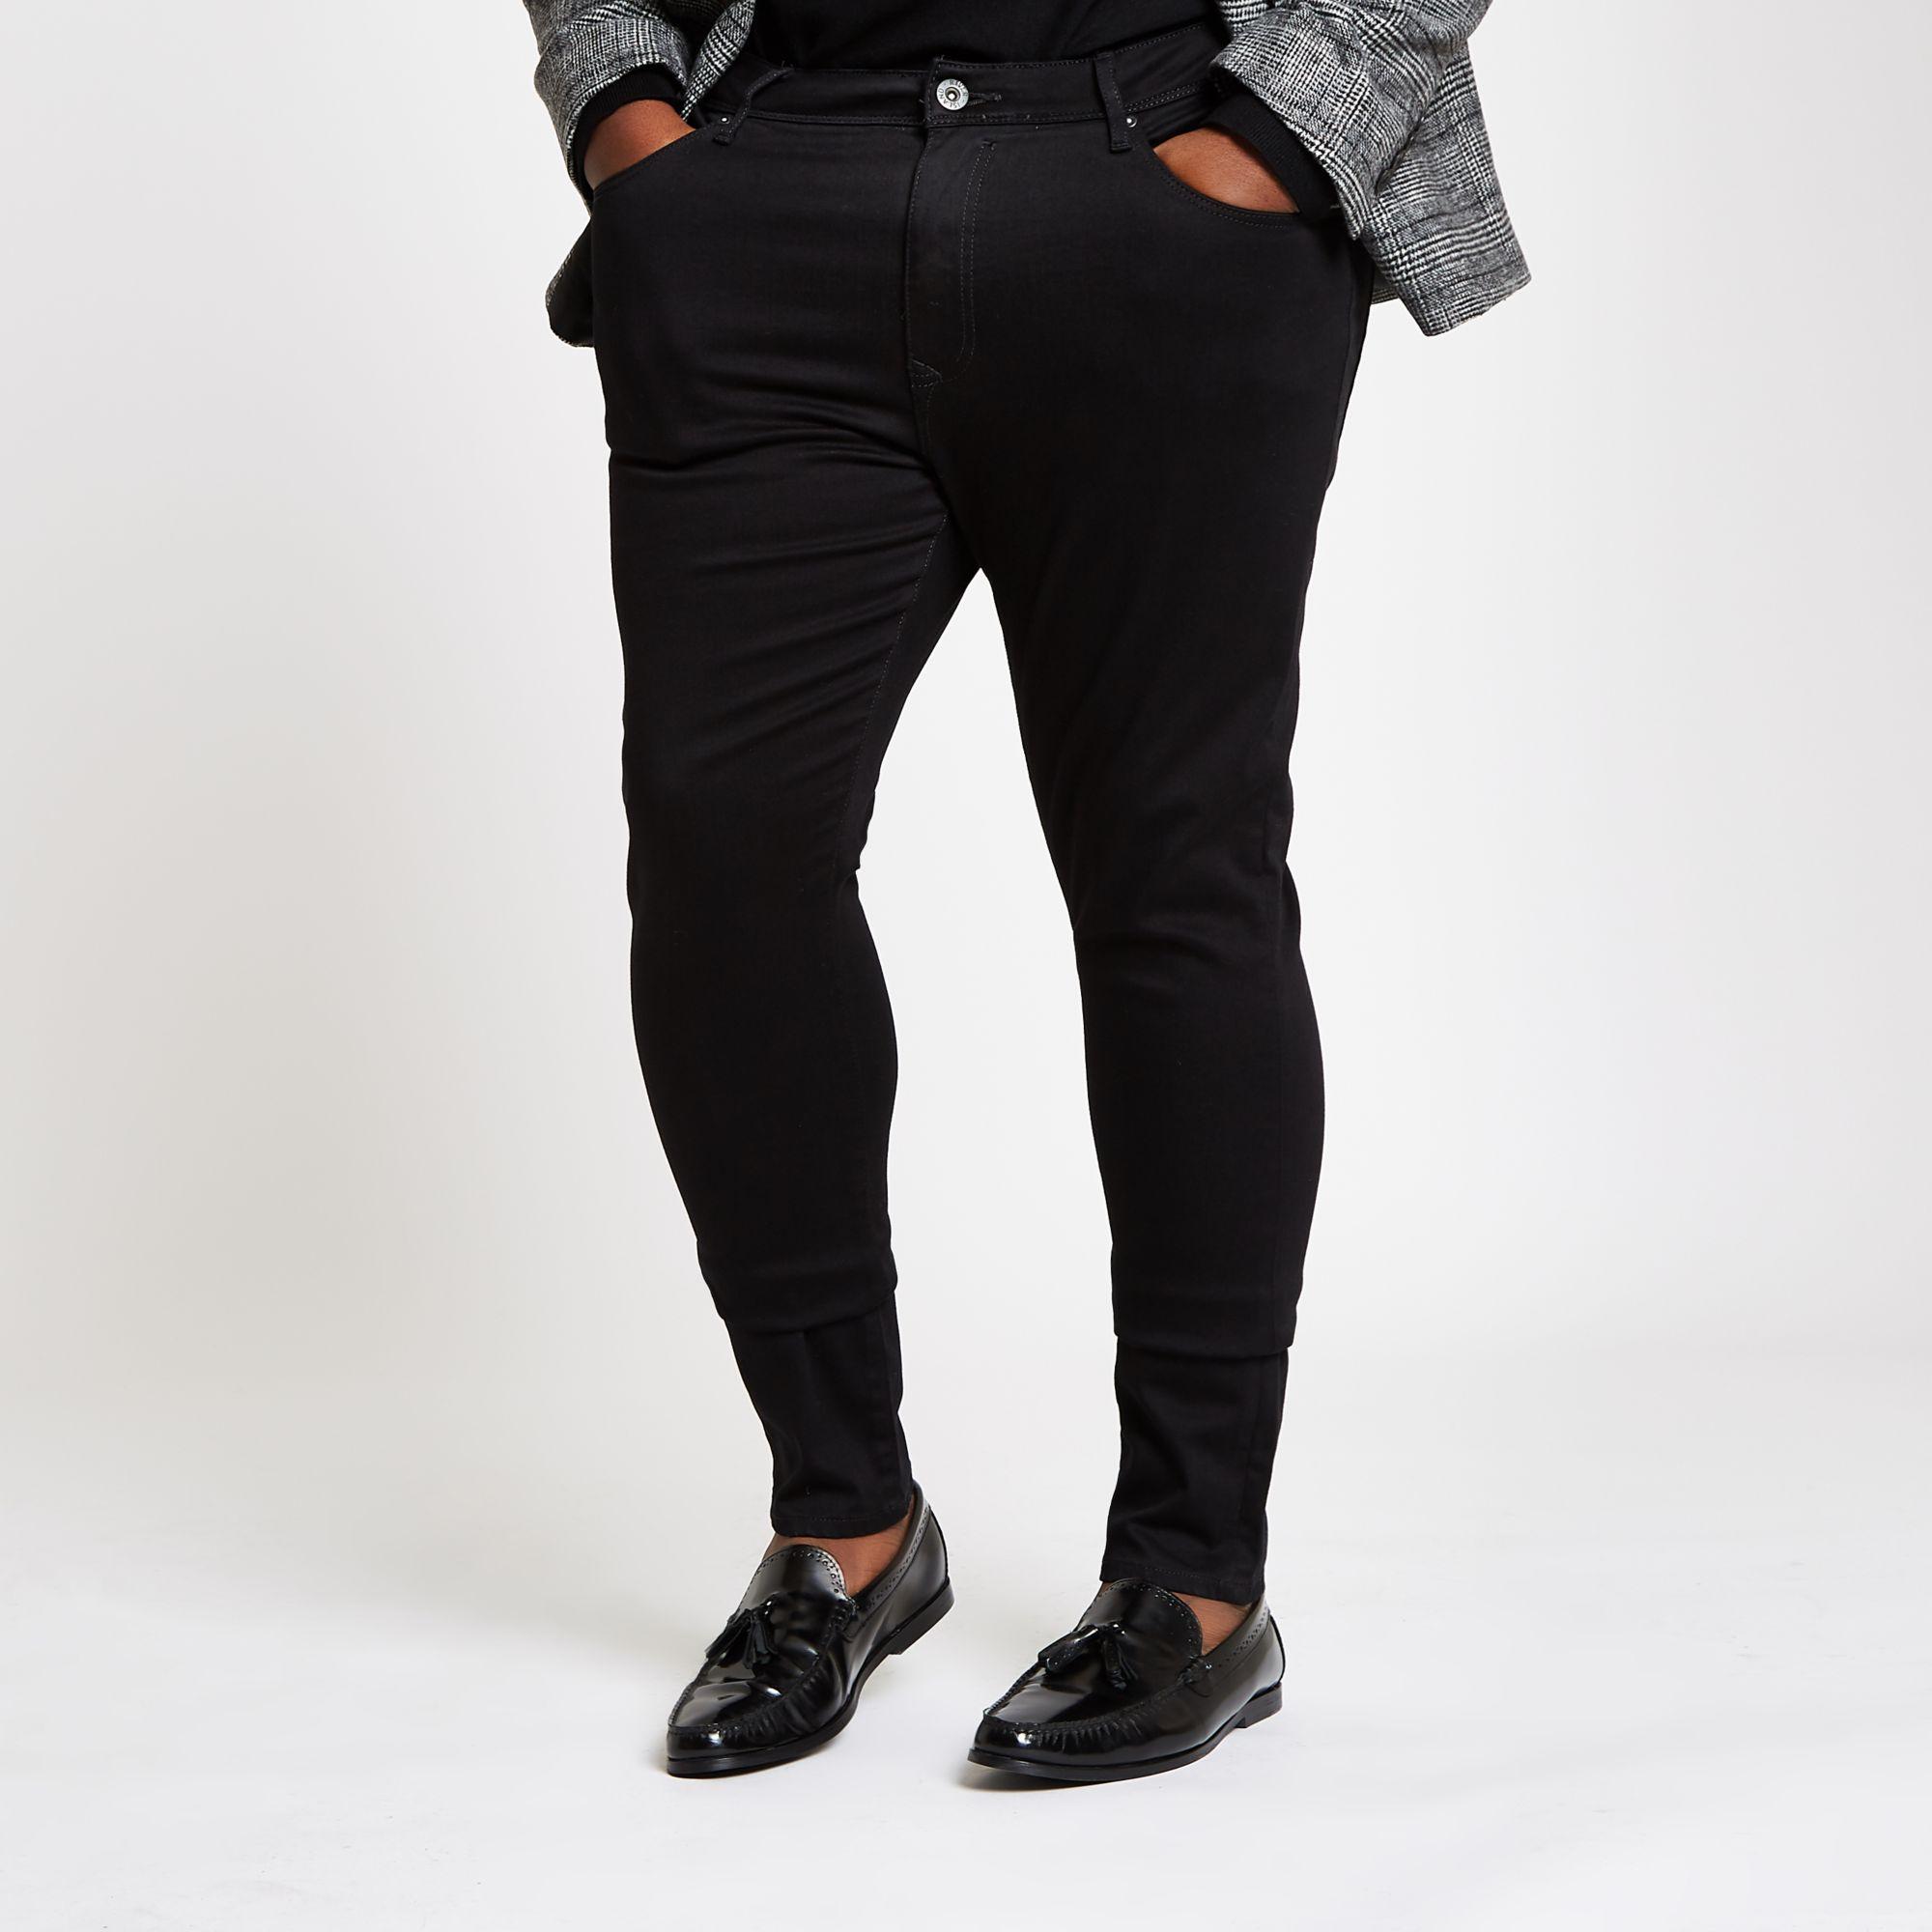 River Island Denim Big And Tall Black Super Skinny Jeans for Men - Lyst